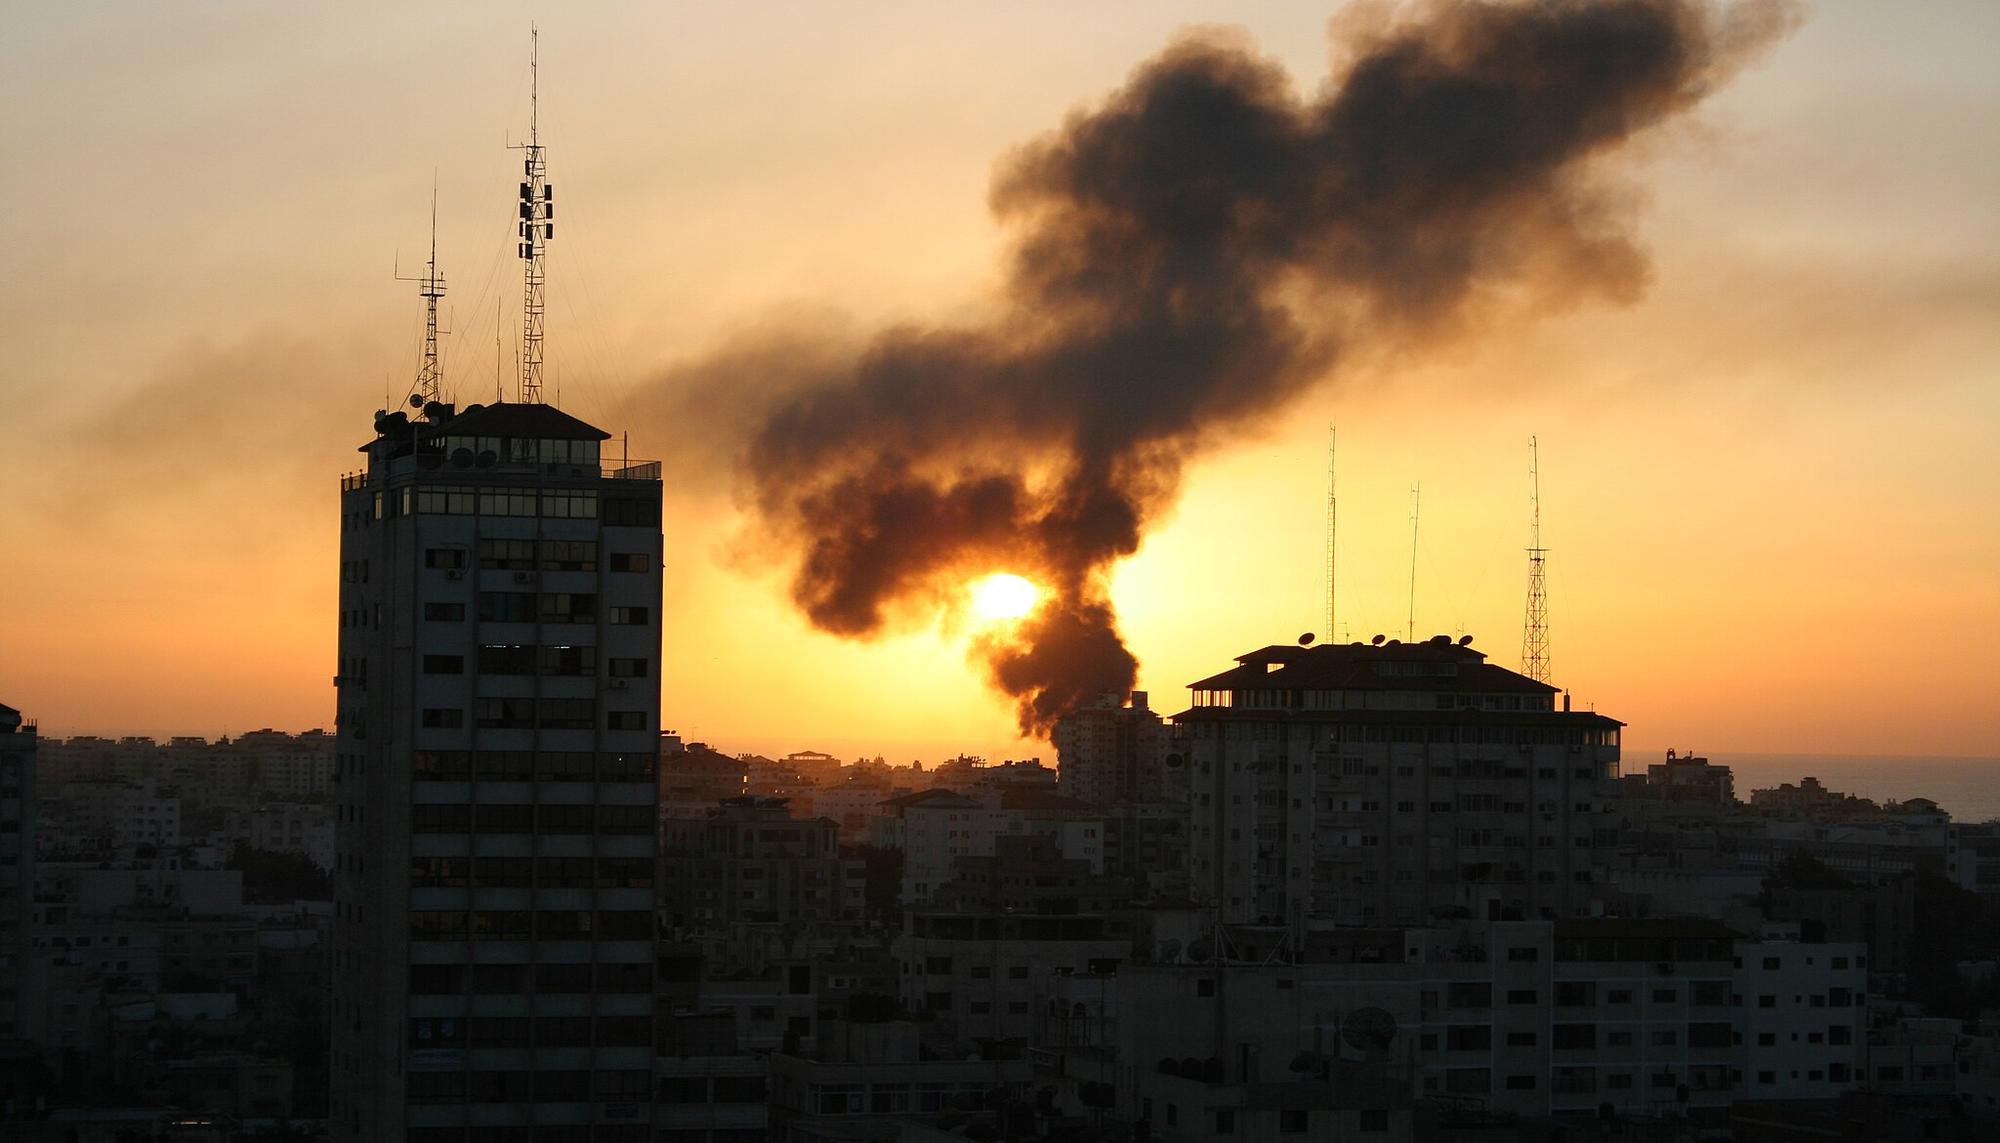 gaza burns